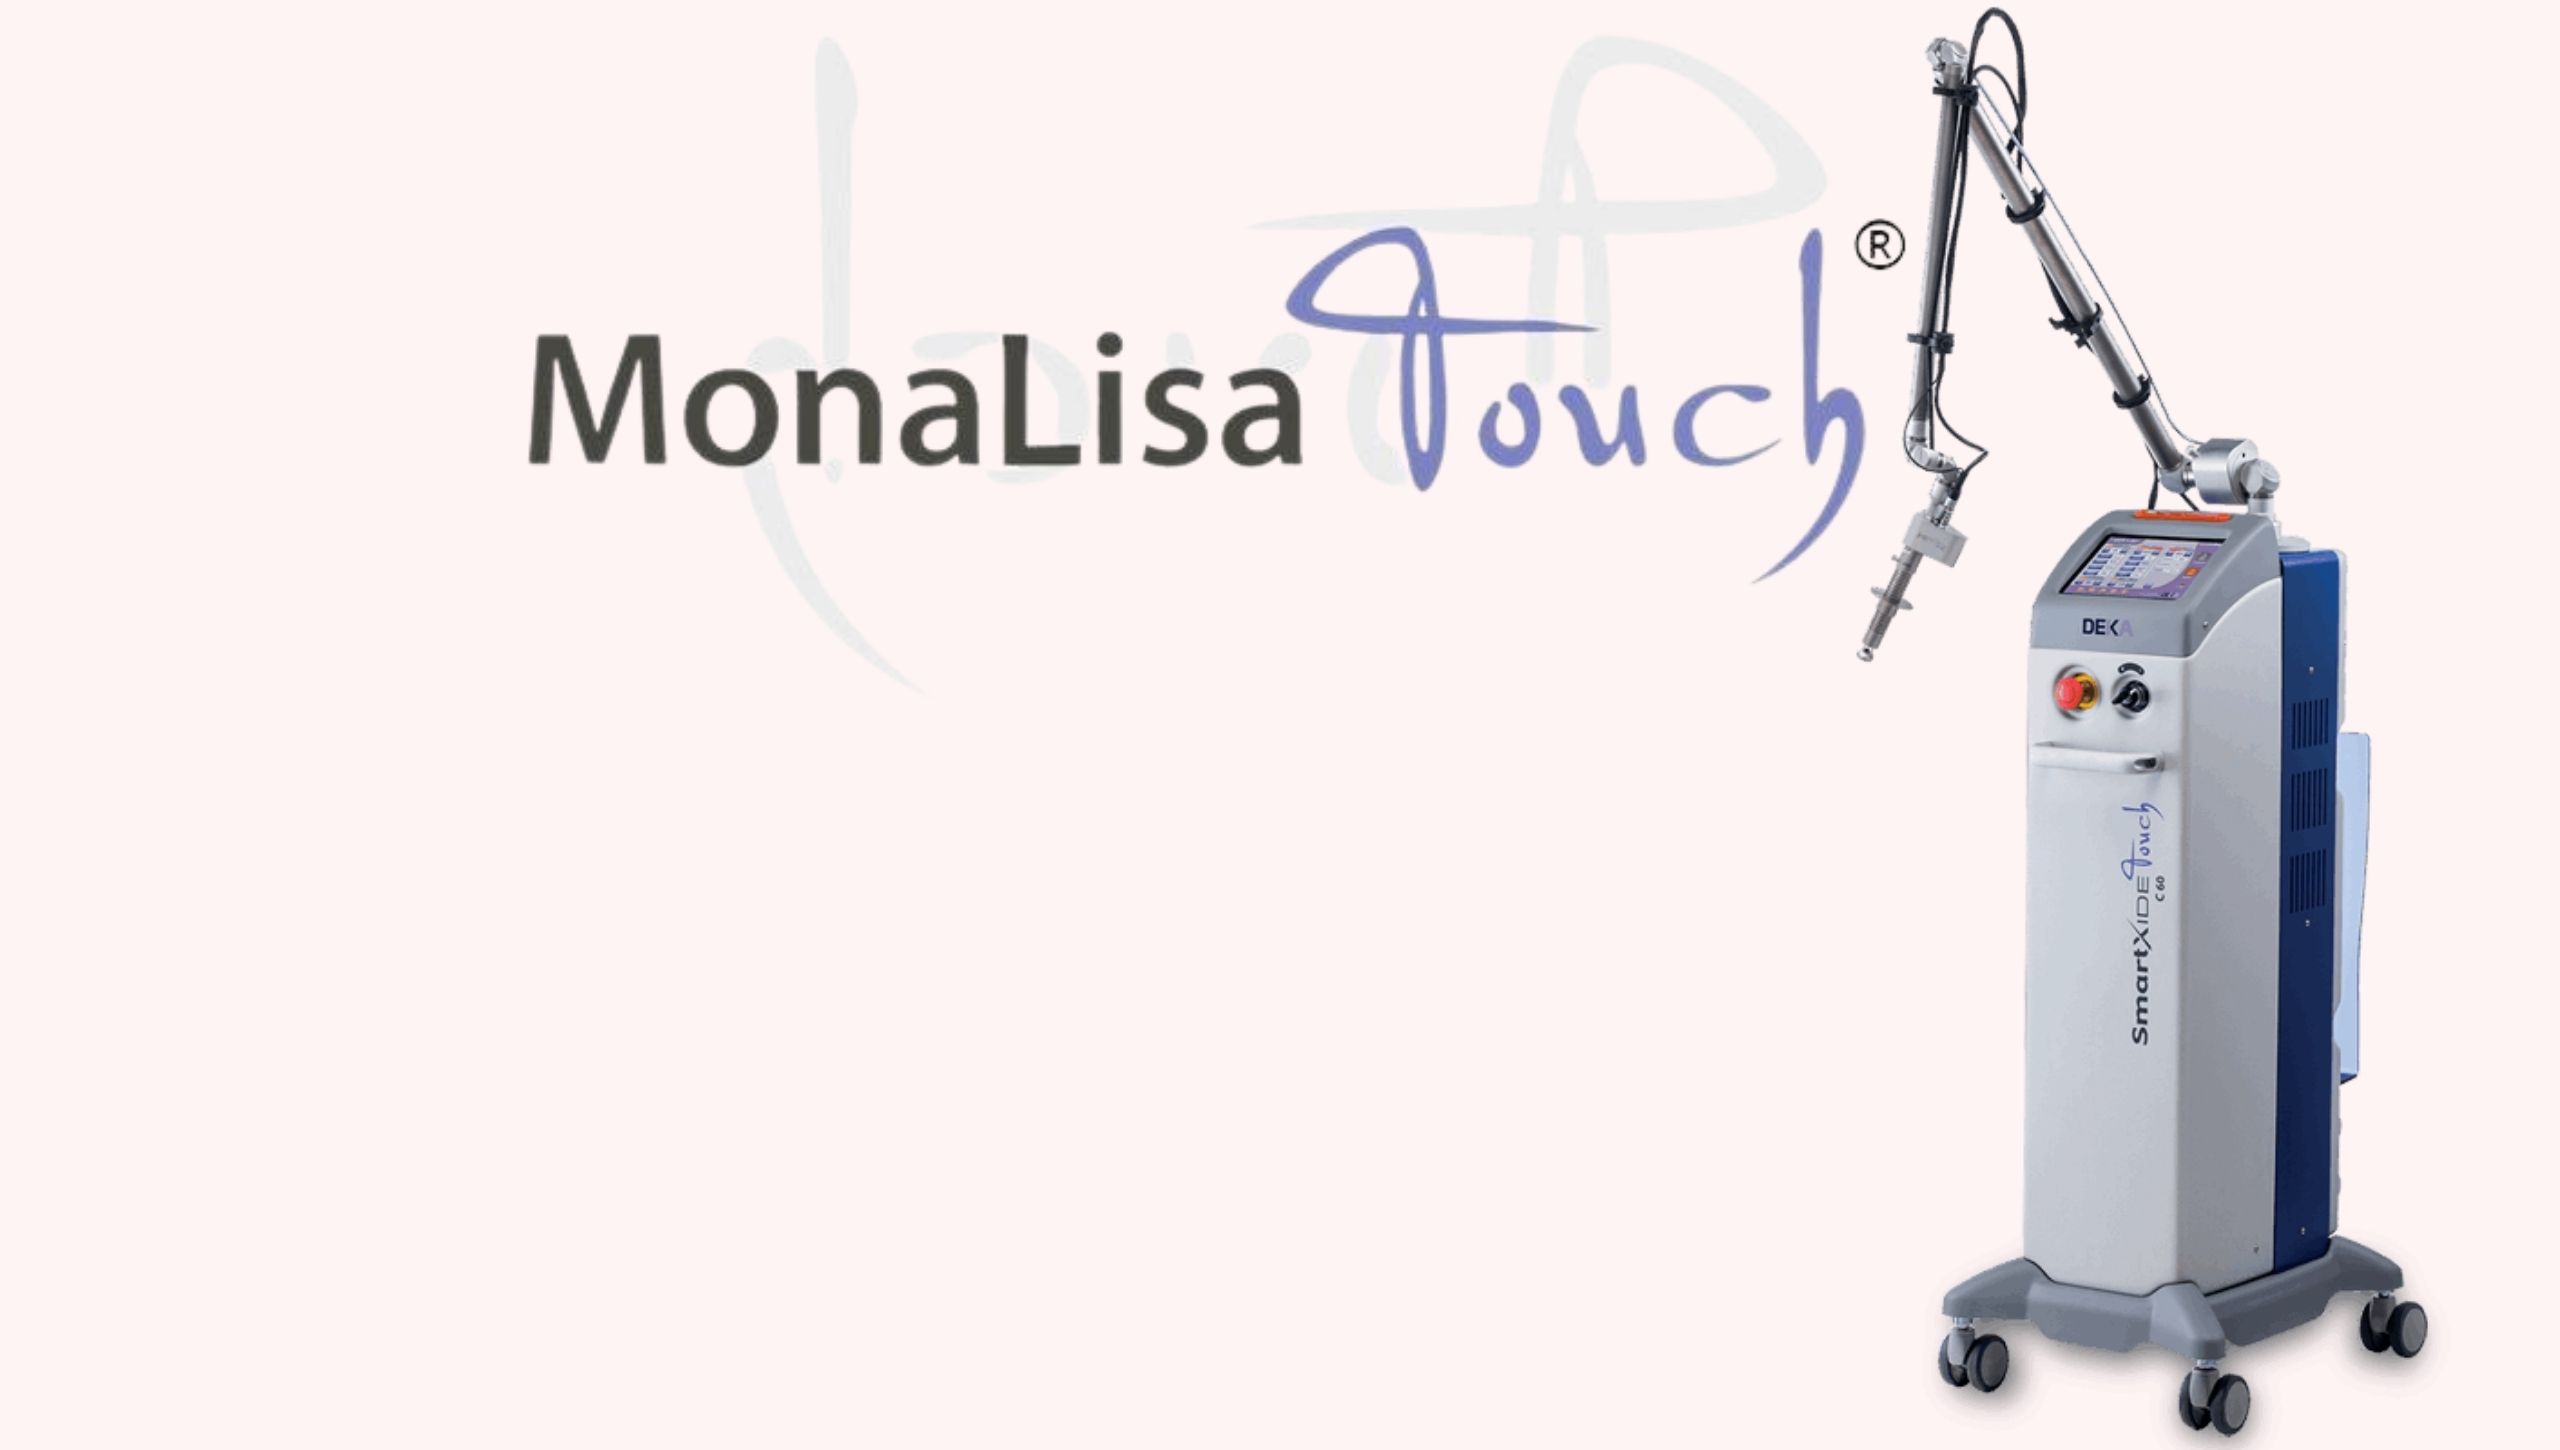 MonaLisa Touch